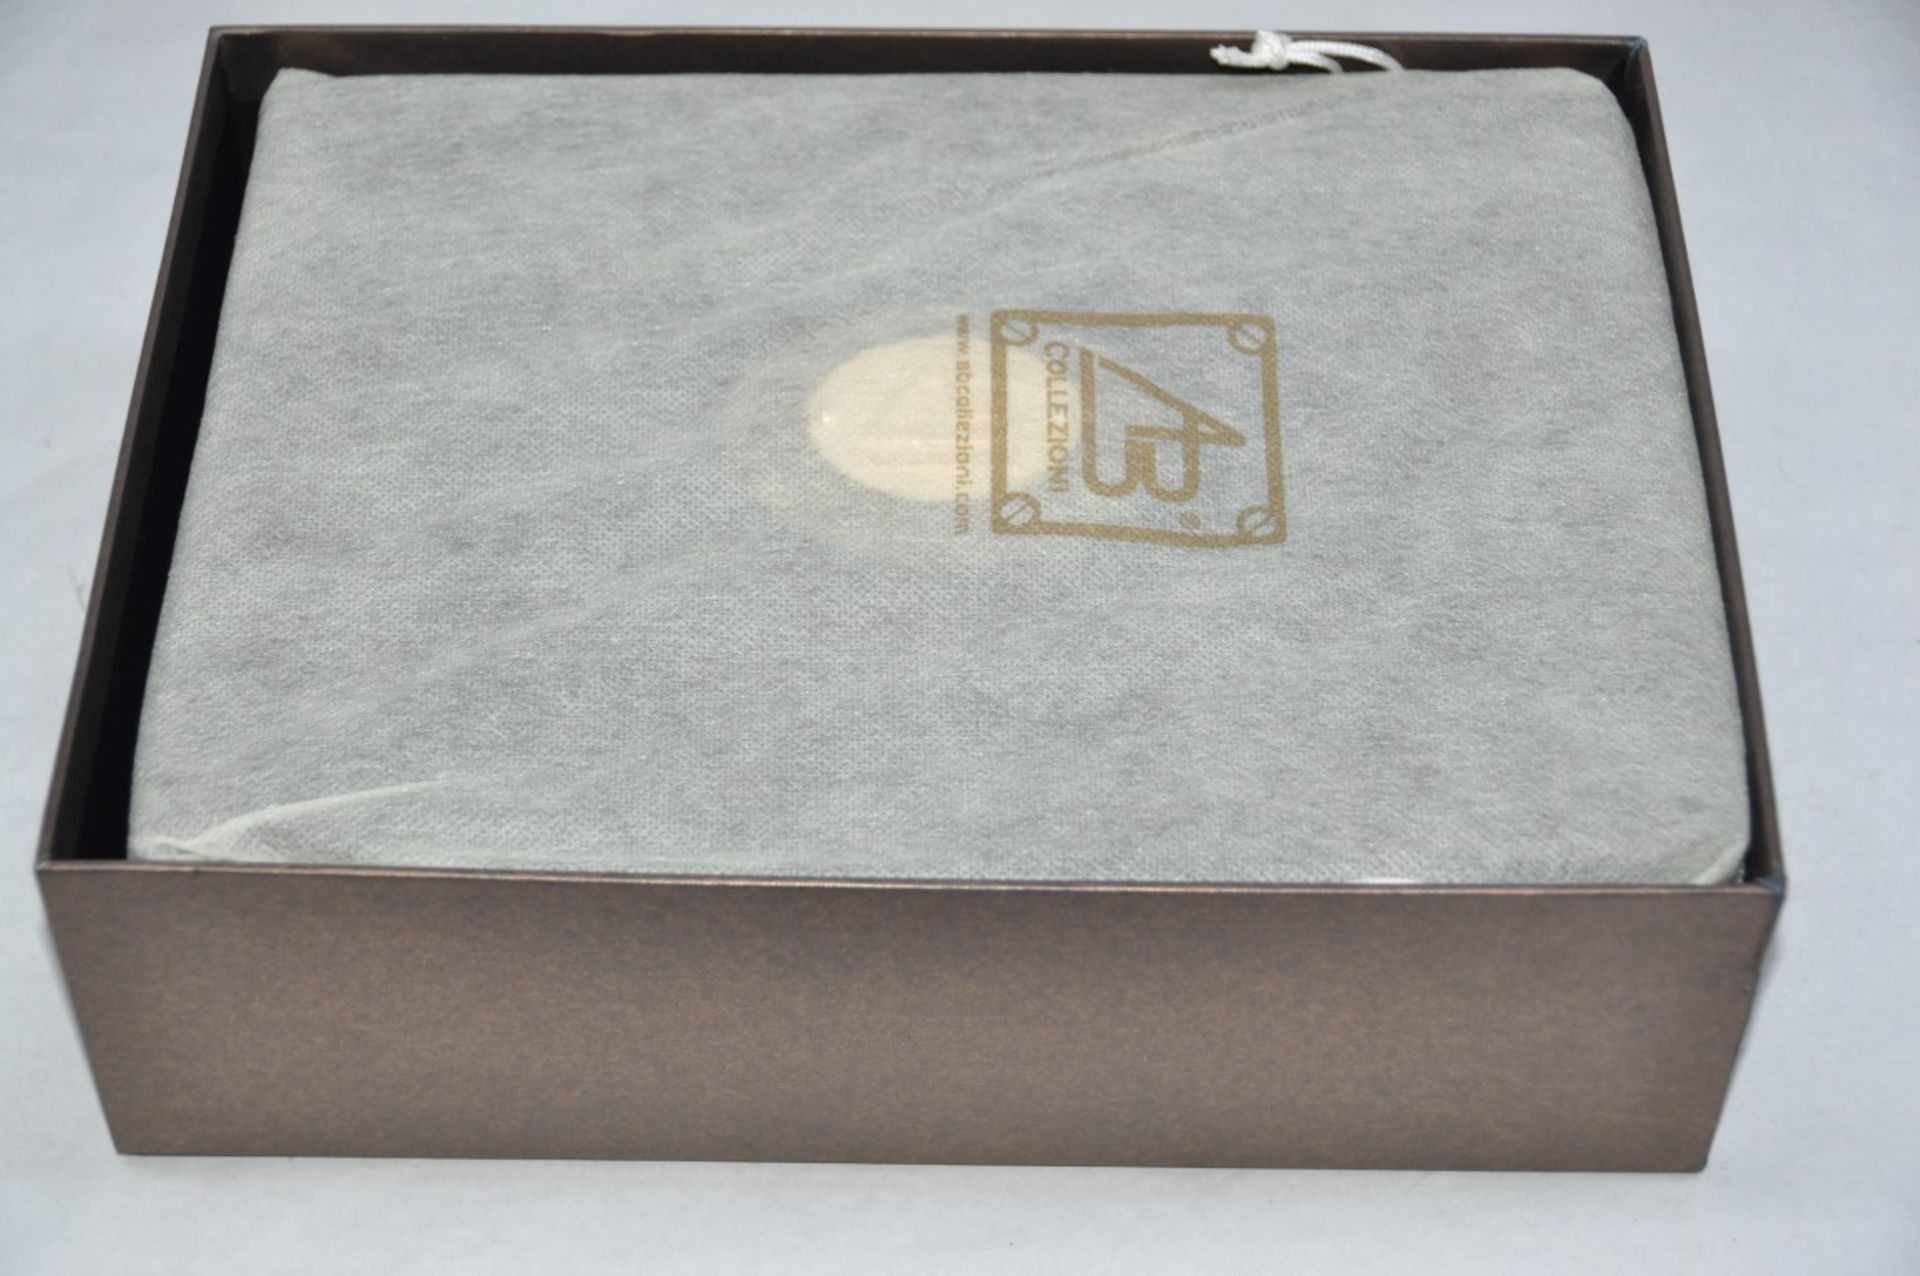 1 x "AB Collezioni" Italian Genuine Leather-Bound Luxury POKER SET (34048) - Ref LT004 - Features - Image 3 of 8